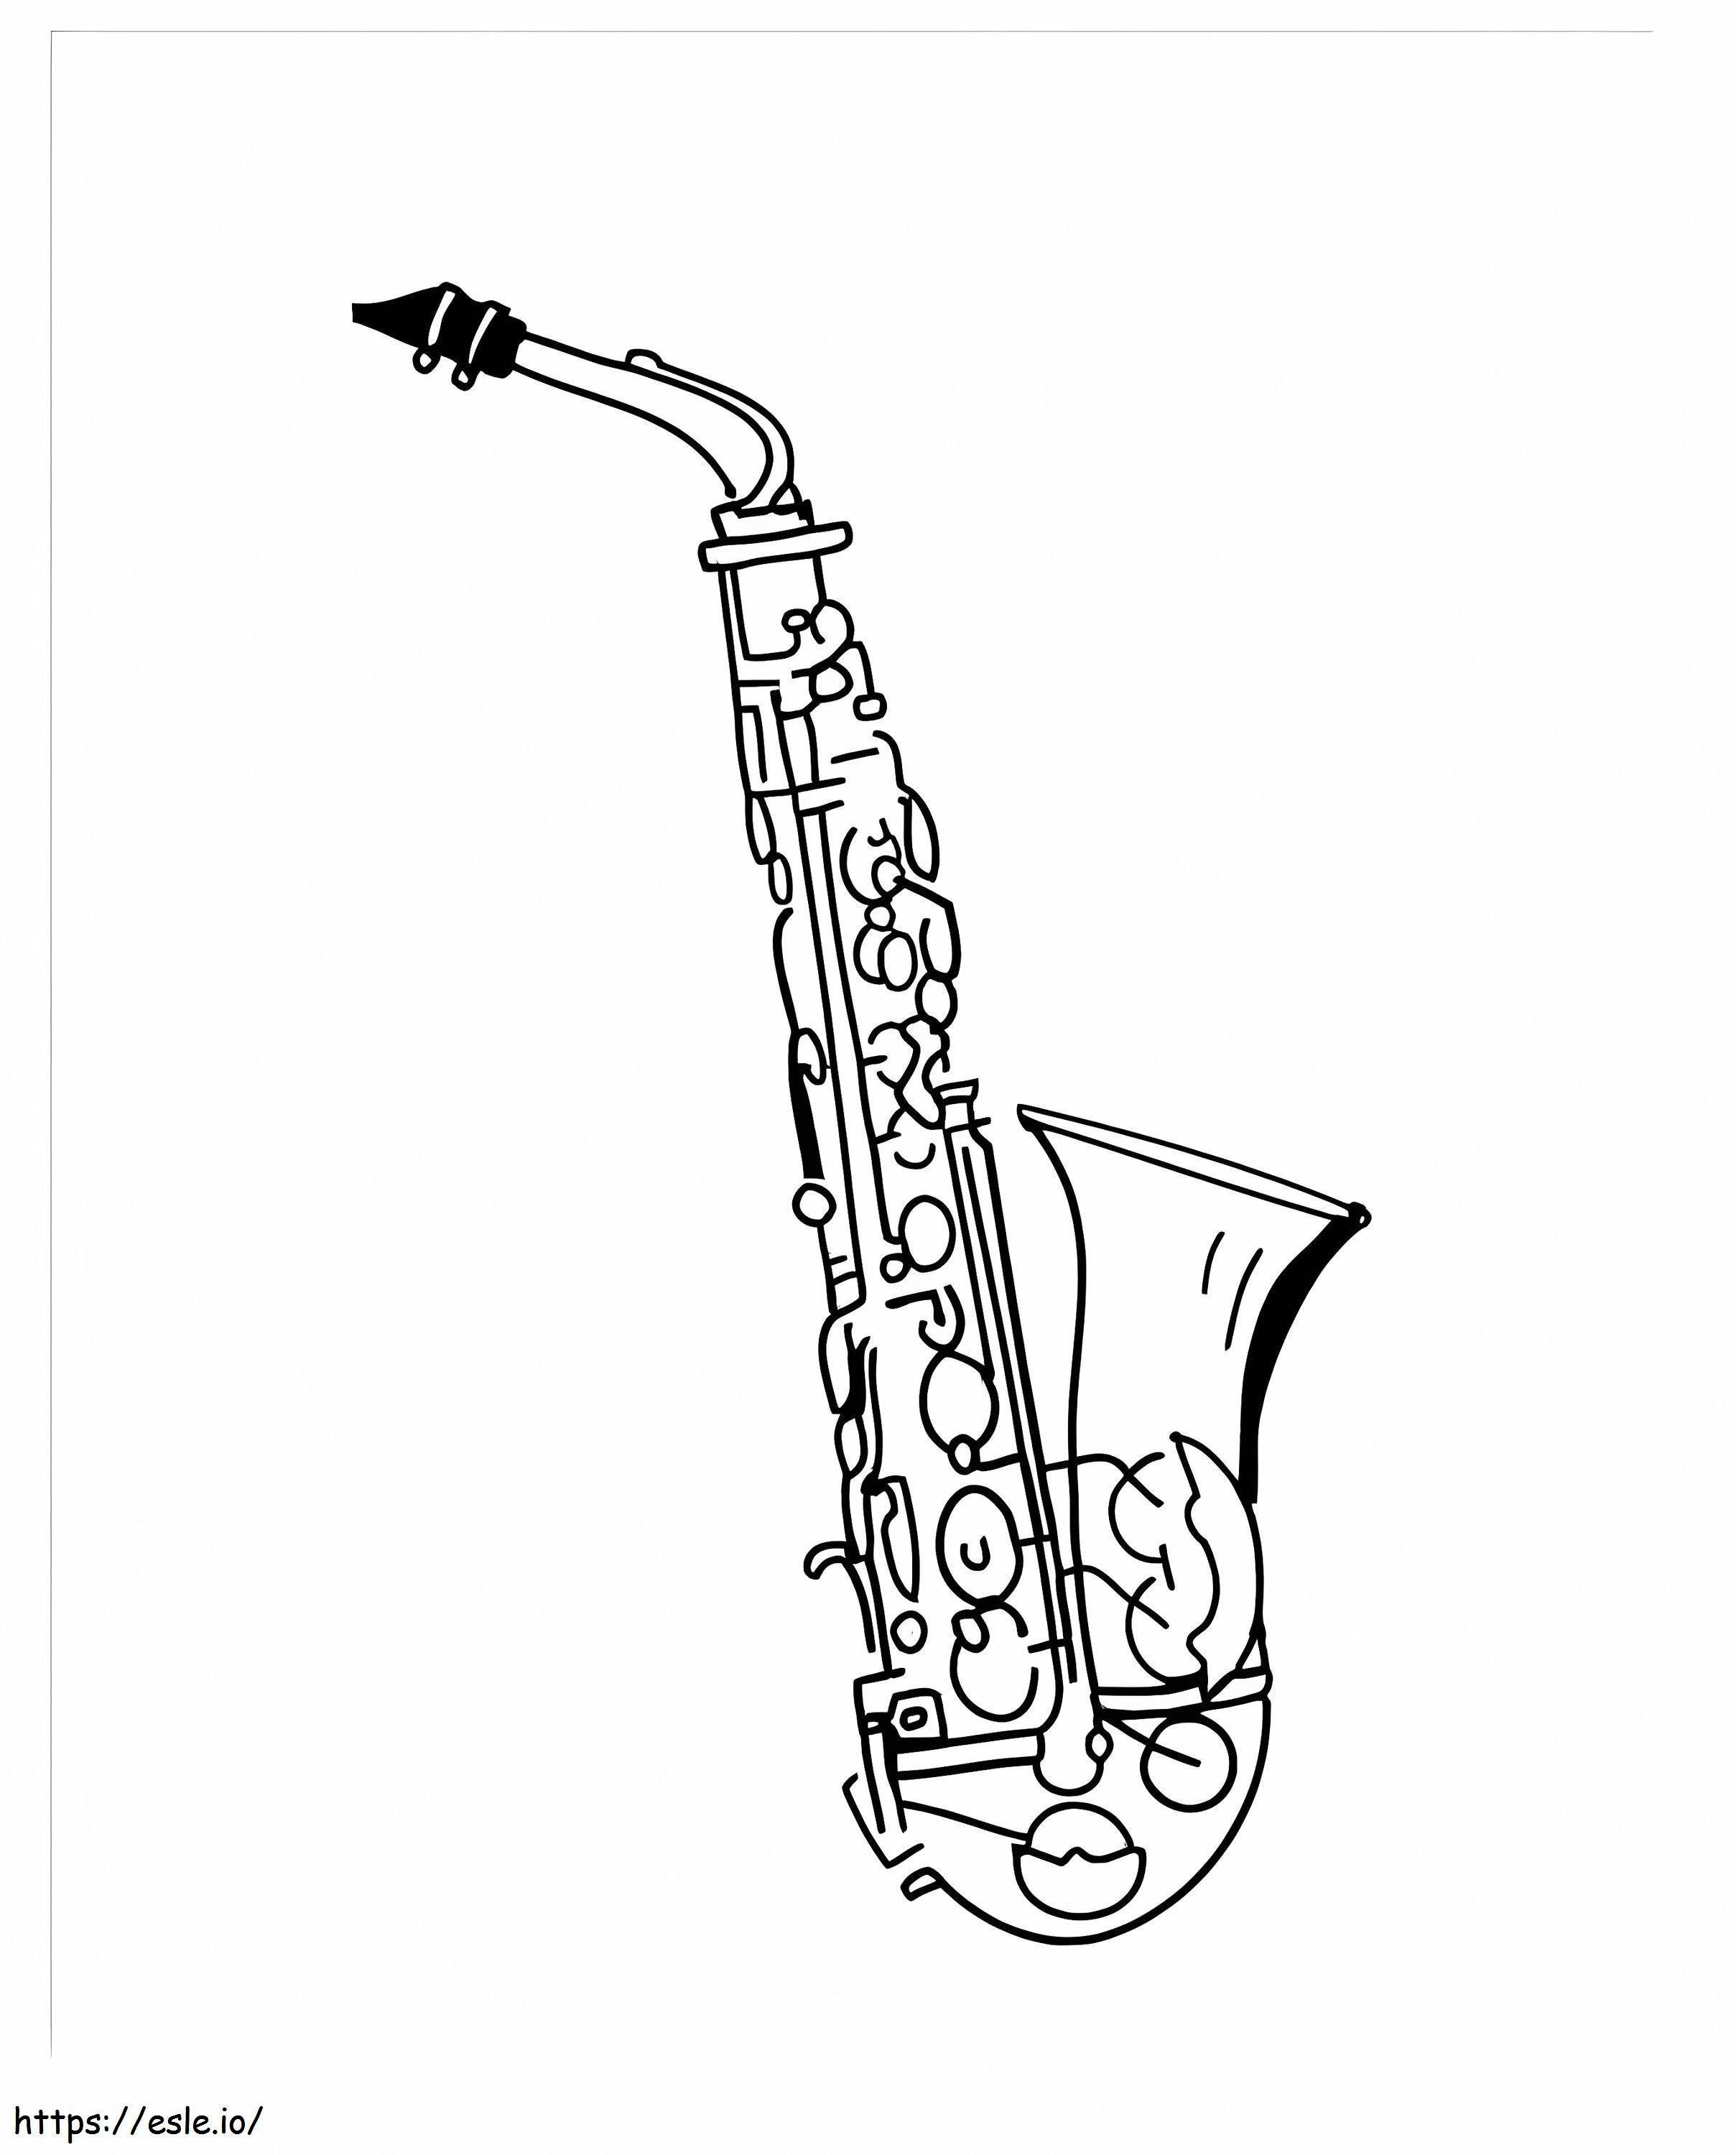 Basic Saxophone 1 coloring page